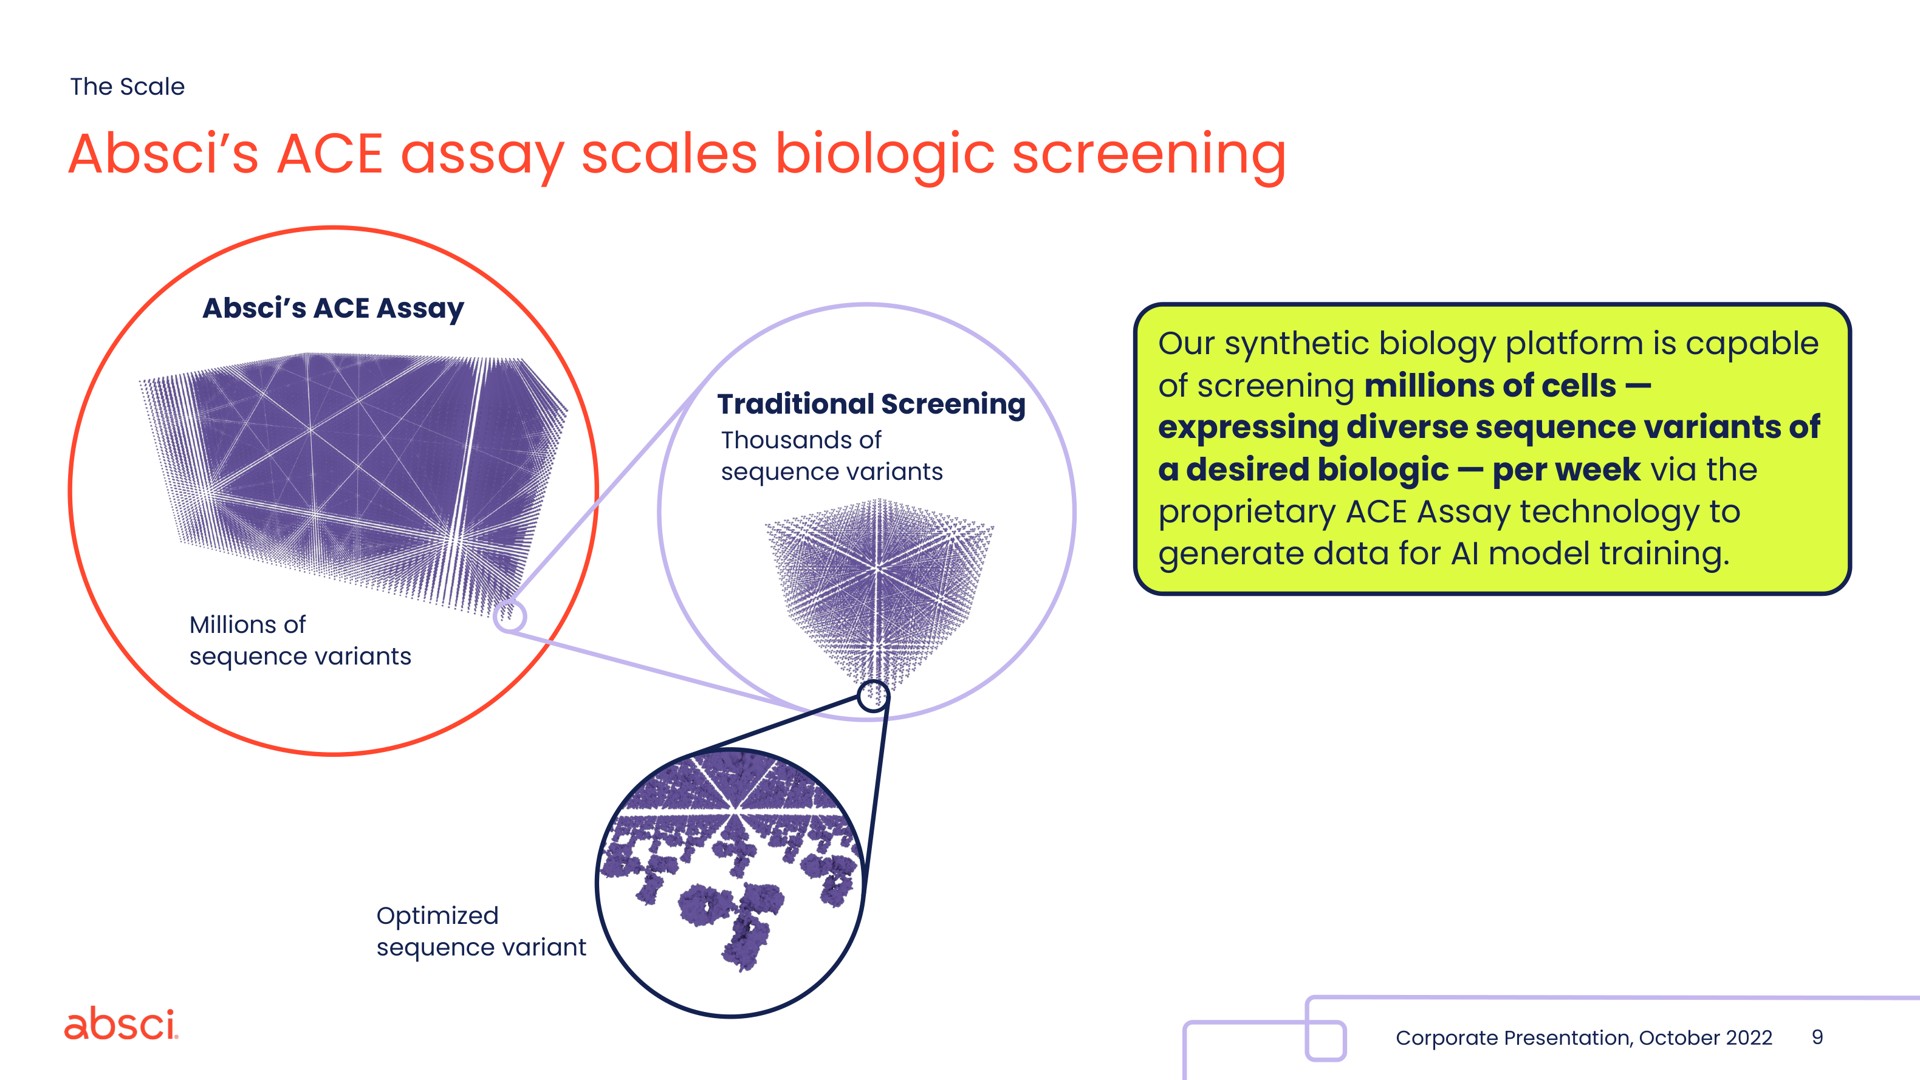 ace assay scales biologic screening | Absci